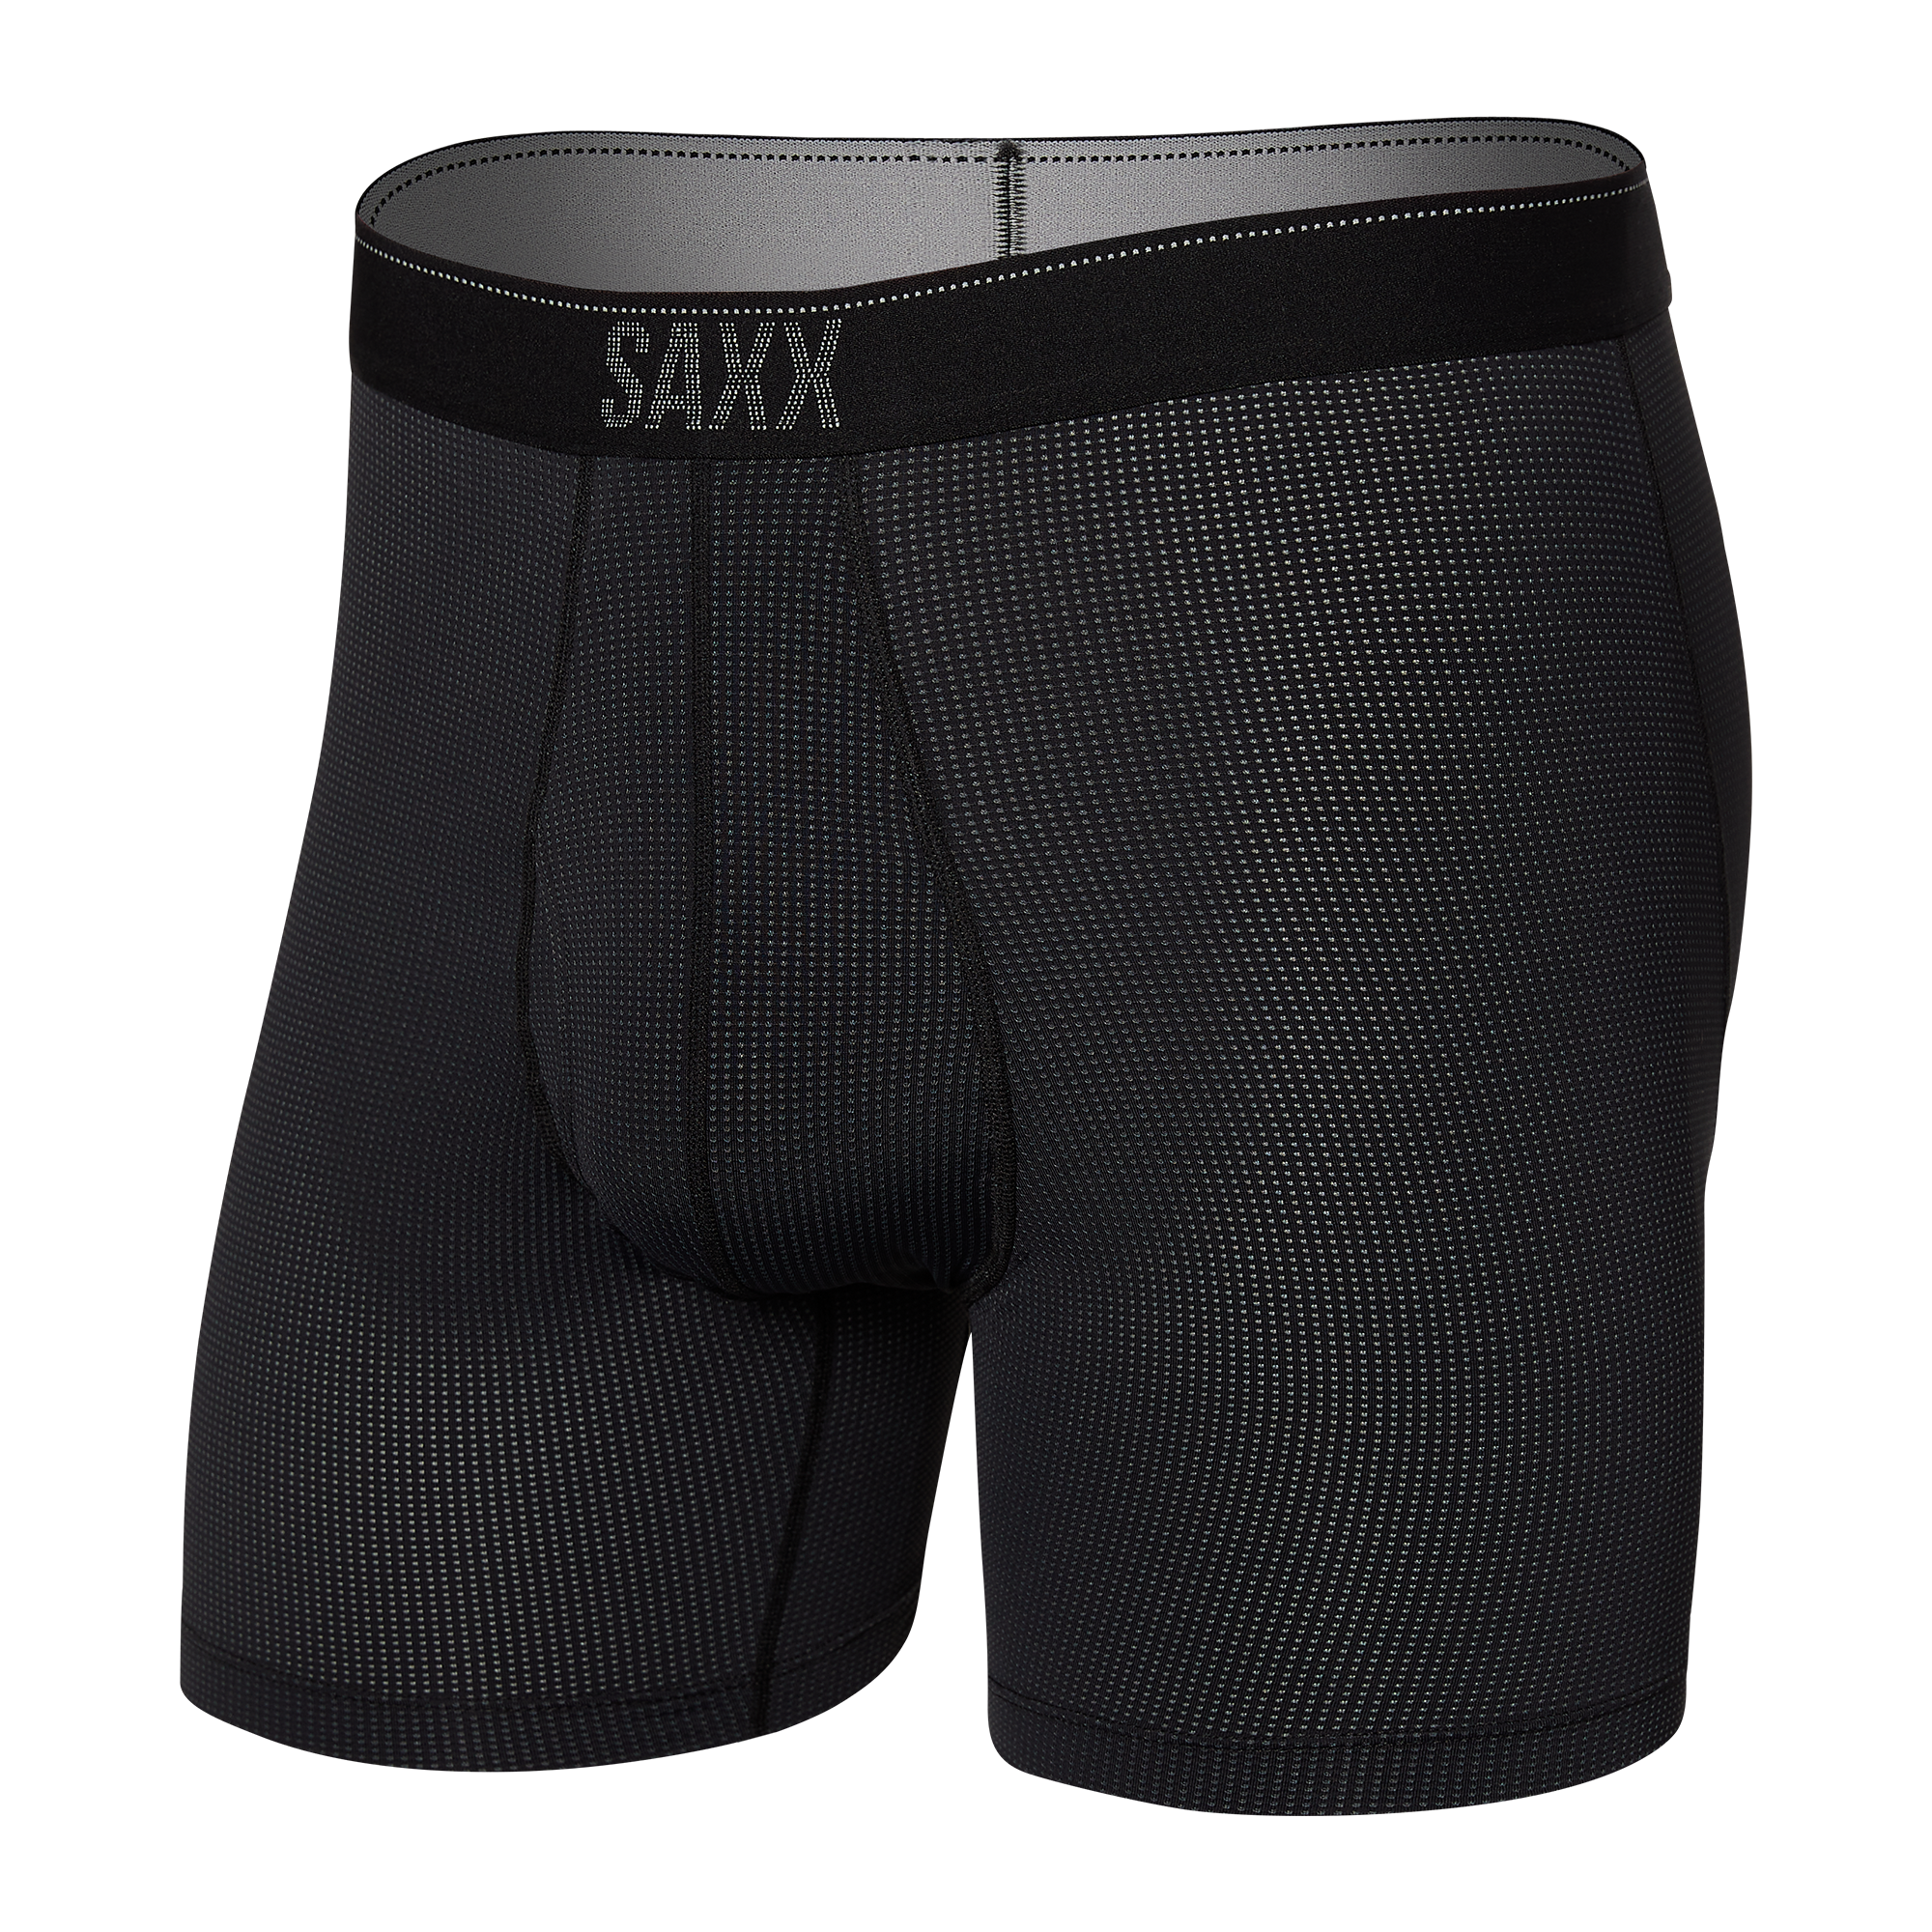 Saxx Men's Kinetic HD Boxer Brief Underwear - NAVY/CITY BLUE / SMALL